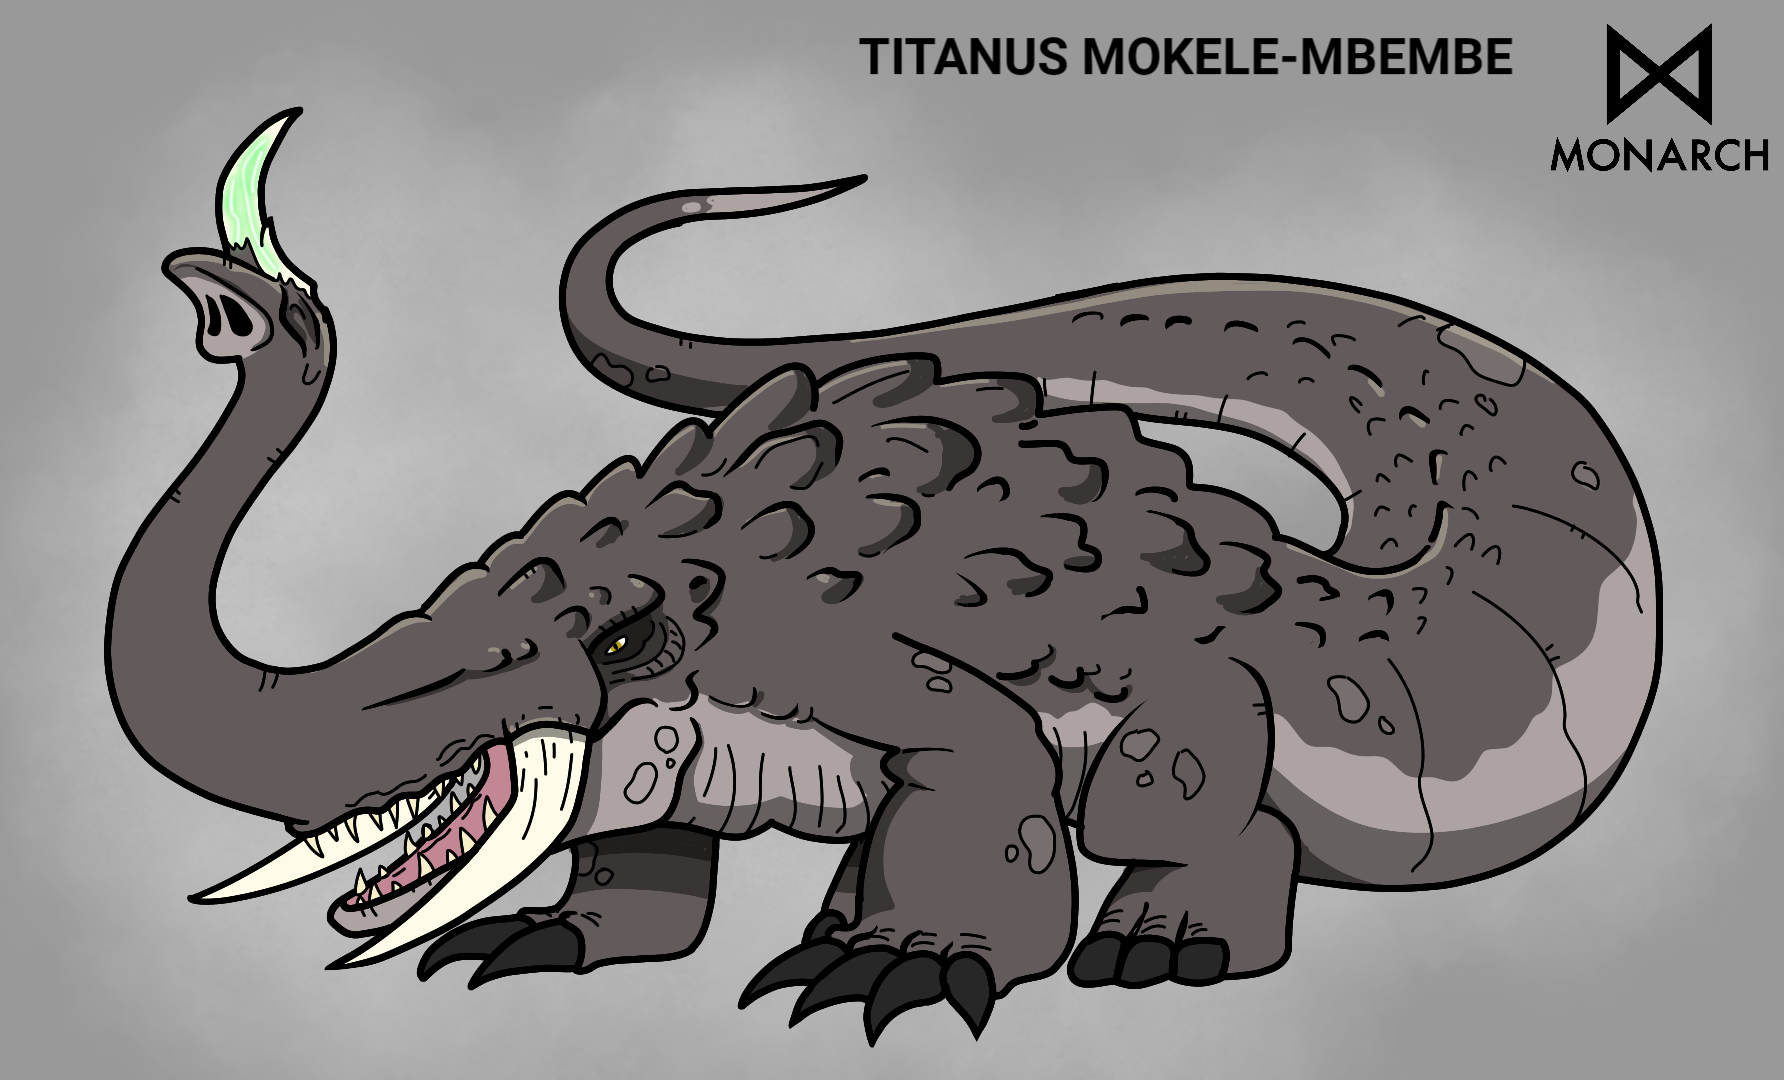 Titanus Mokele-Mbembe by LADAlbarran2001 on DeviantArt